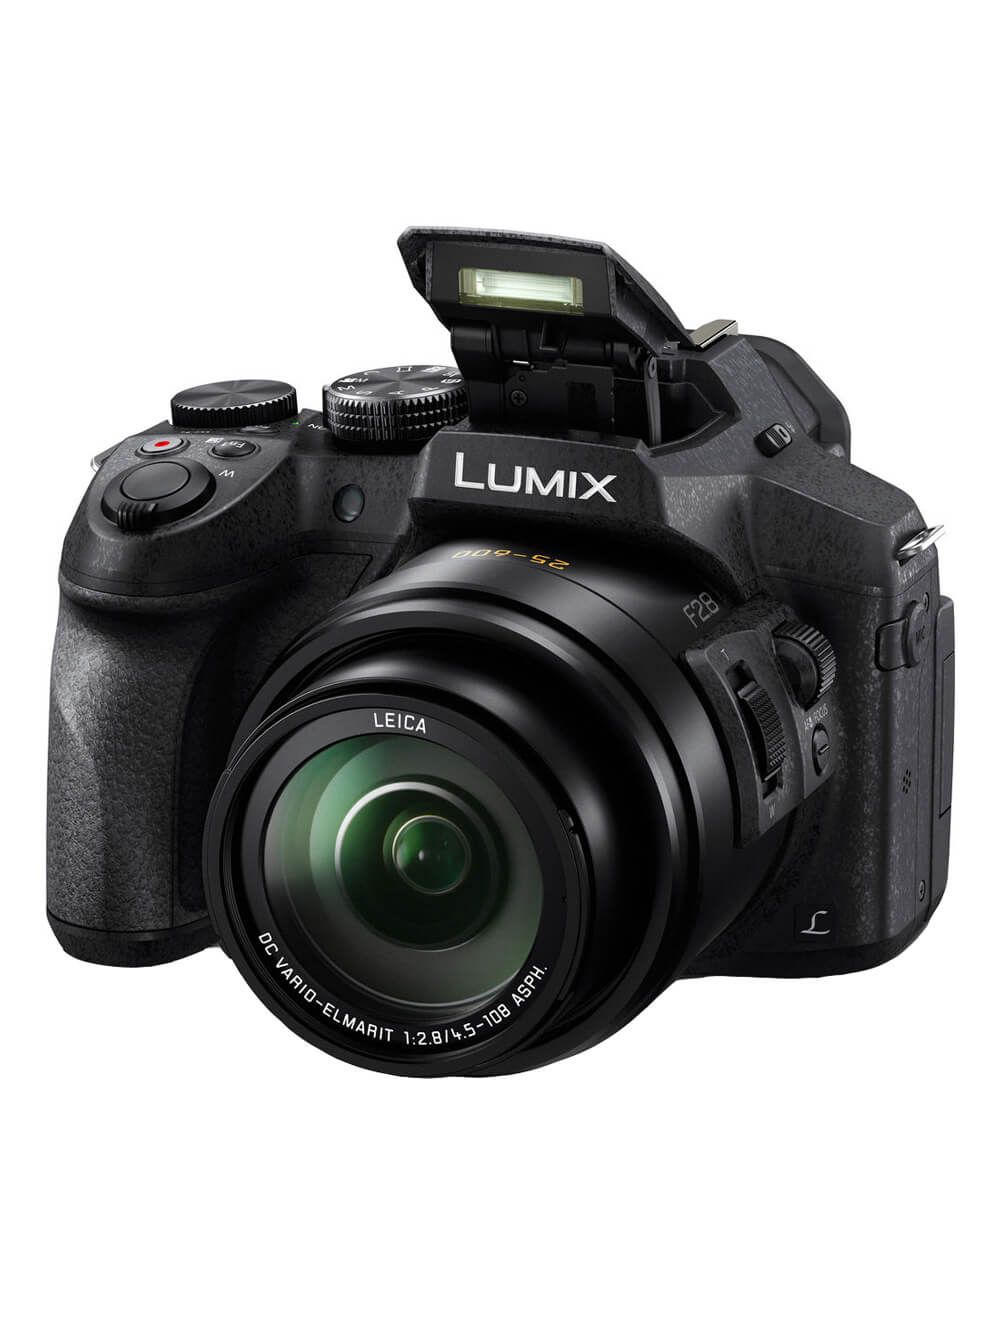 Talloos operator aankomen Panasonic Lumix DMC-FZ300 24x F2.8 Zoom Digital Camera